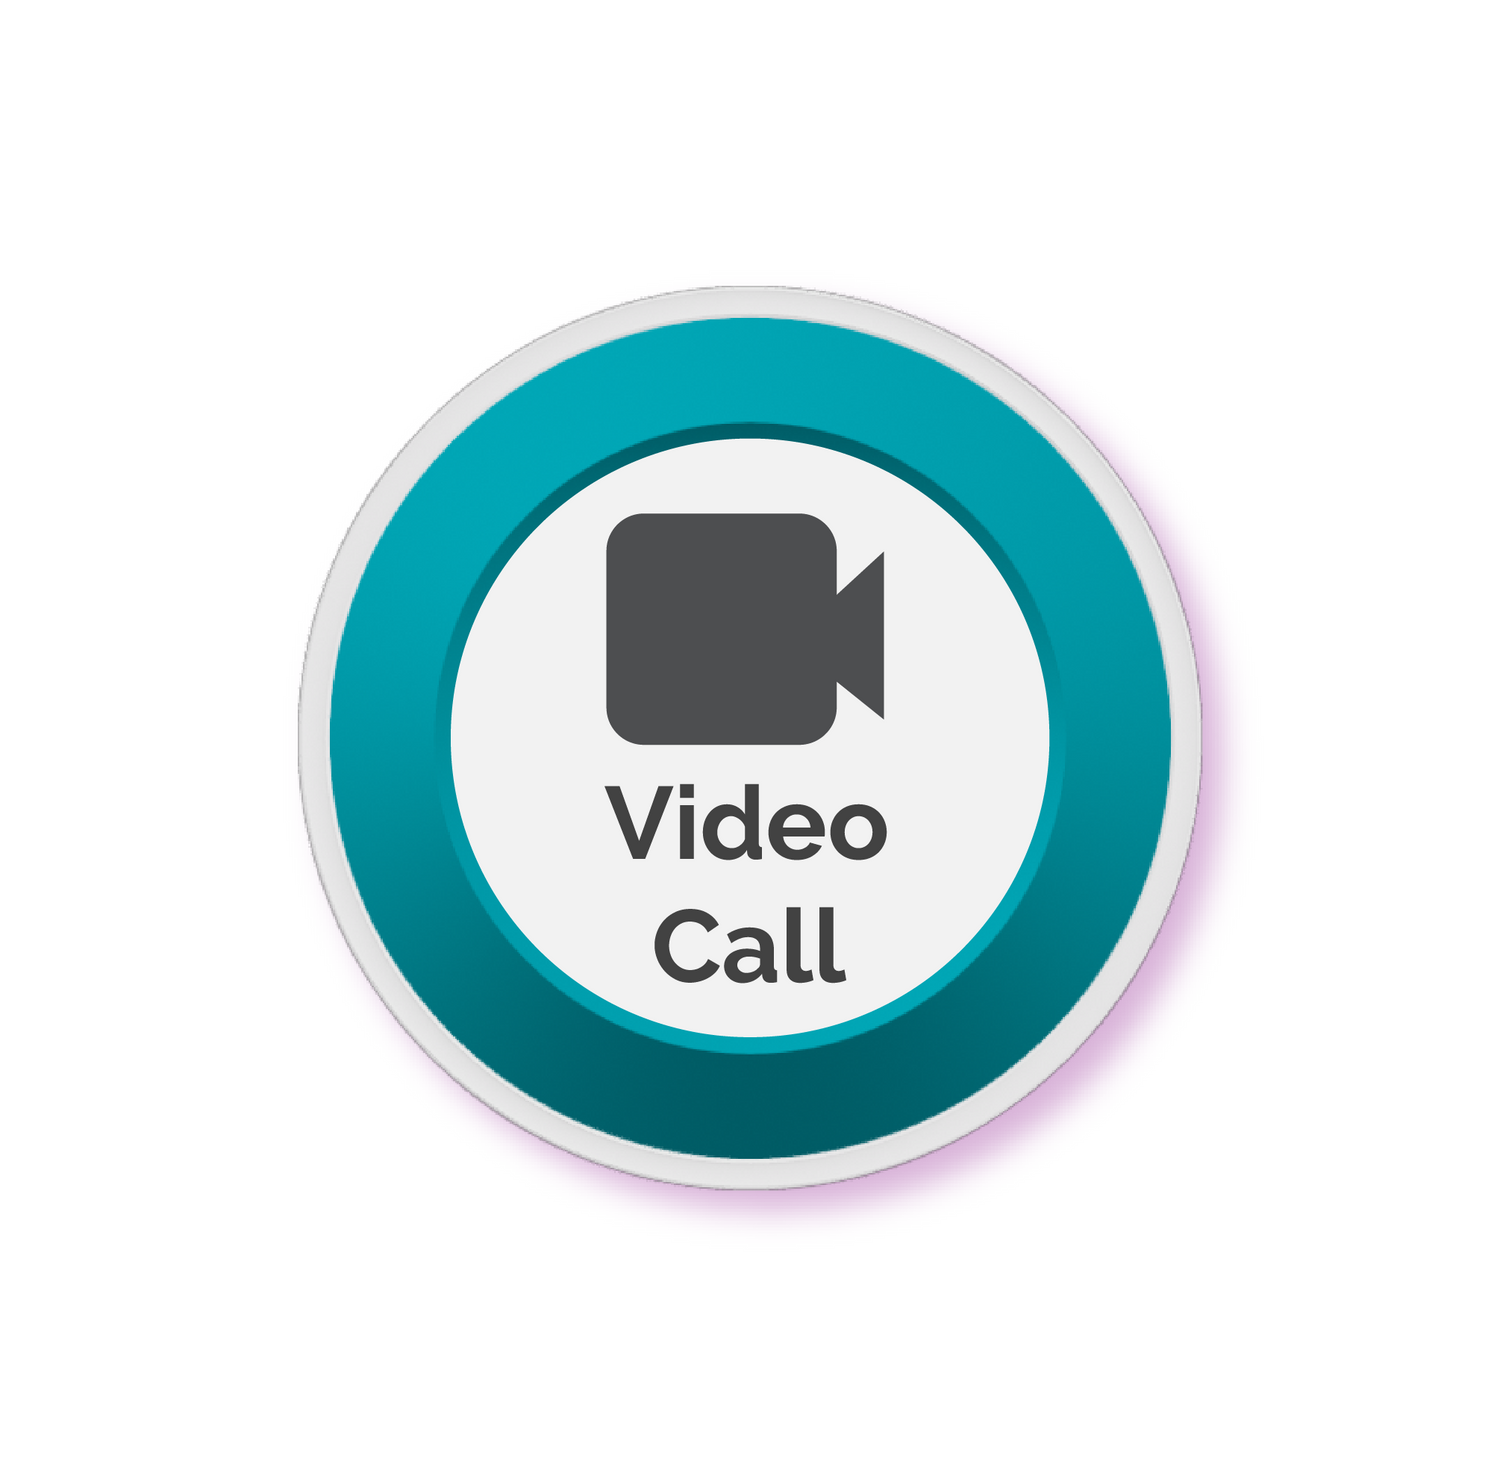 Video Call button